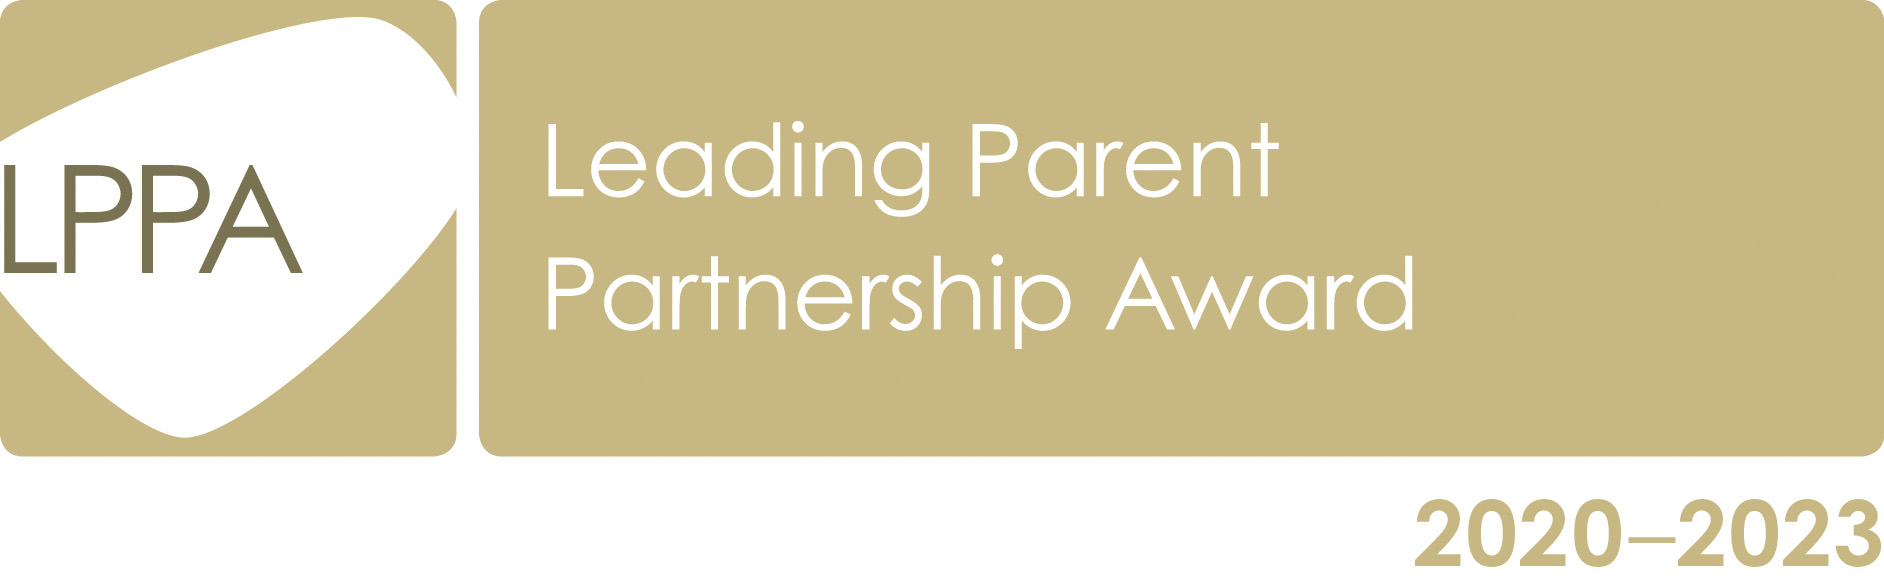 Leading Parent Partnership